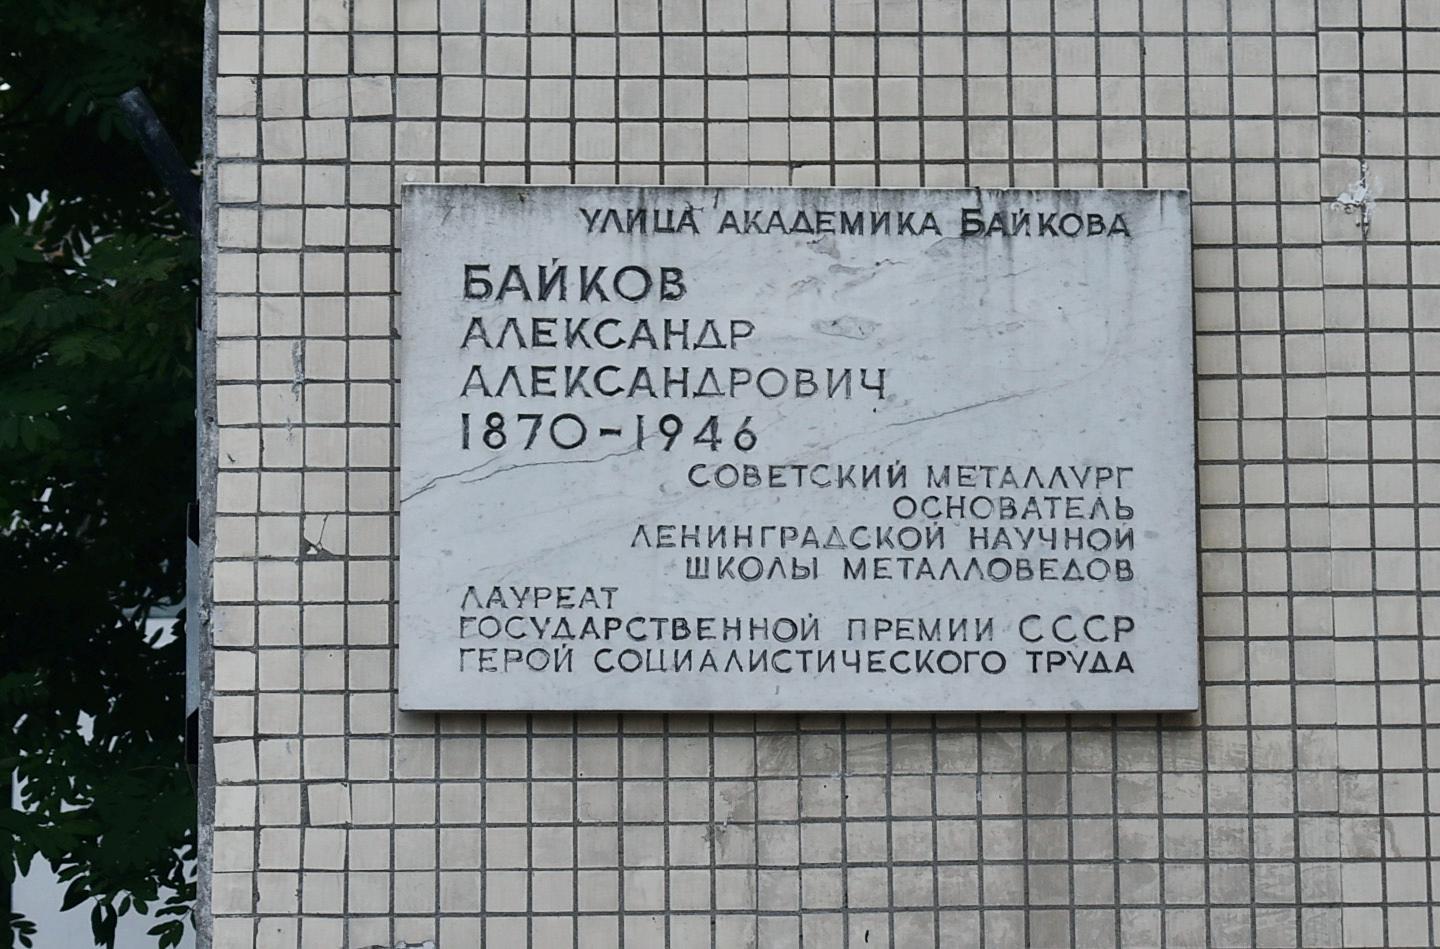 Saint Petersburg, Улица Академика Байкова, 1. Saint Petersburg — Memorial plaques